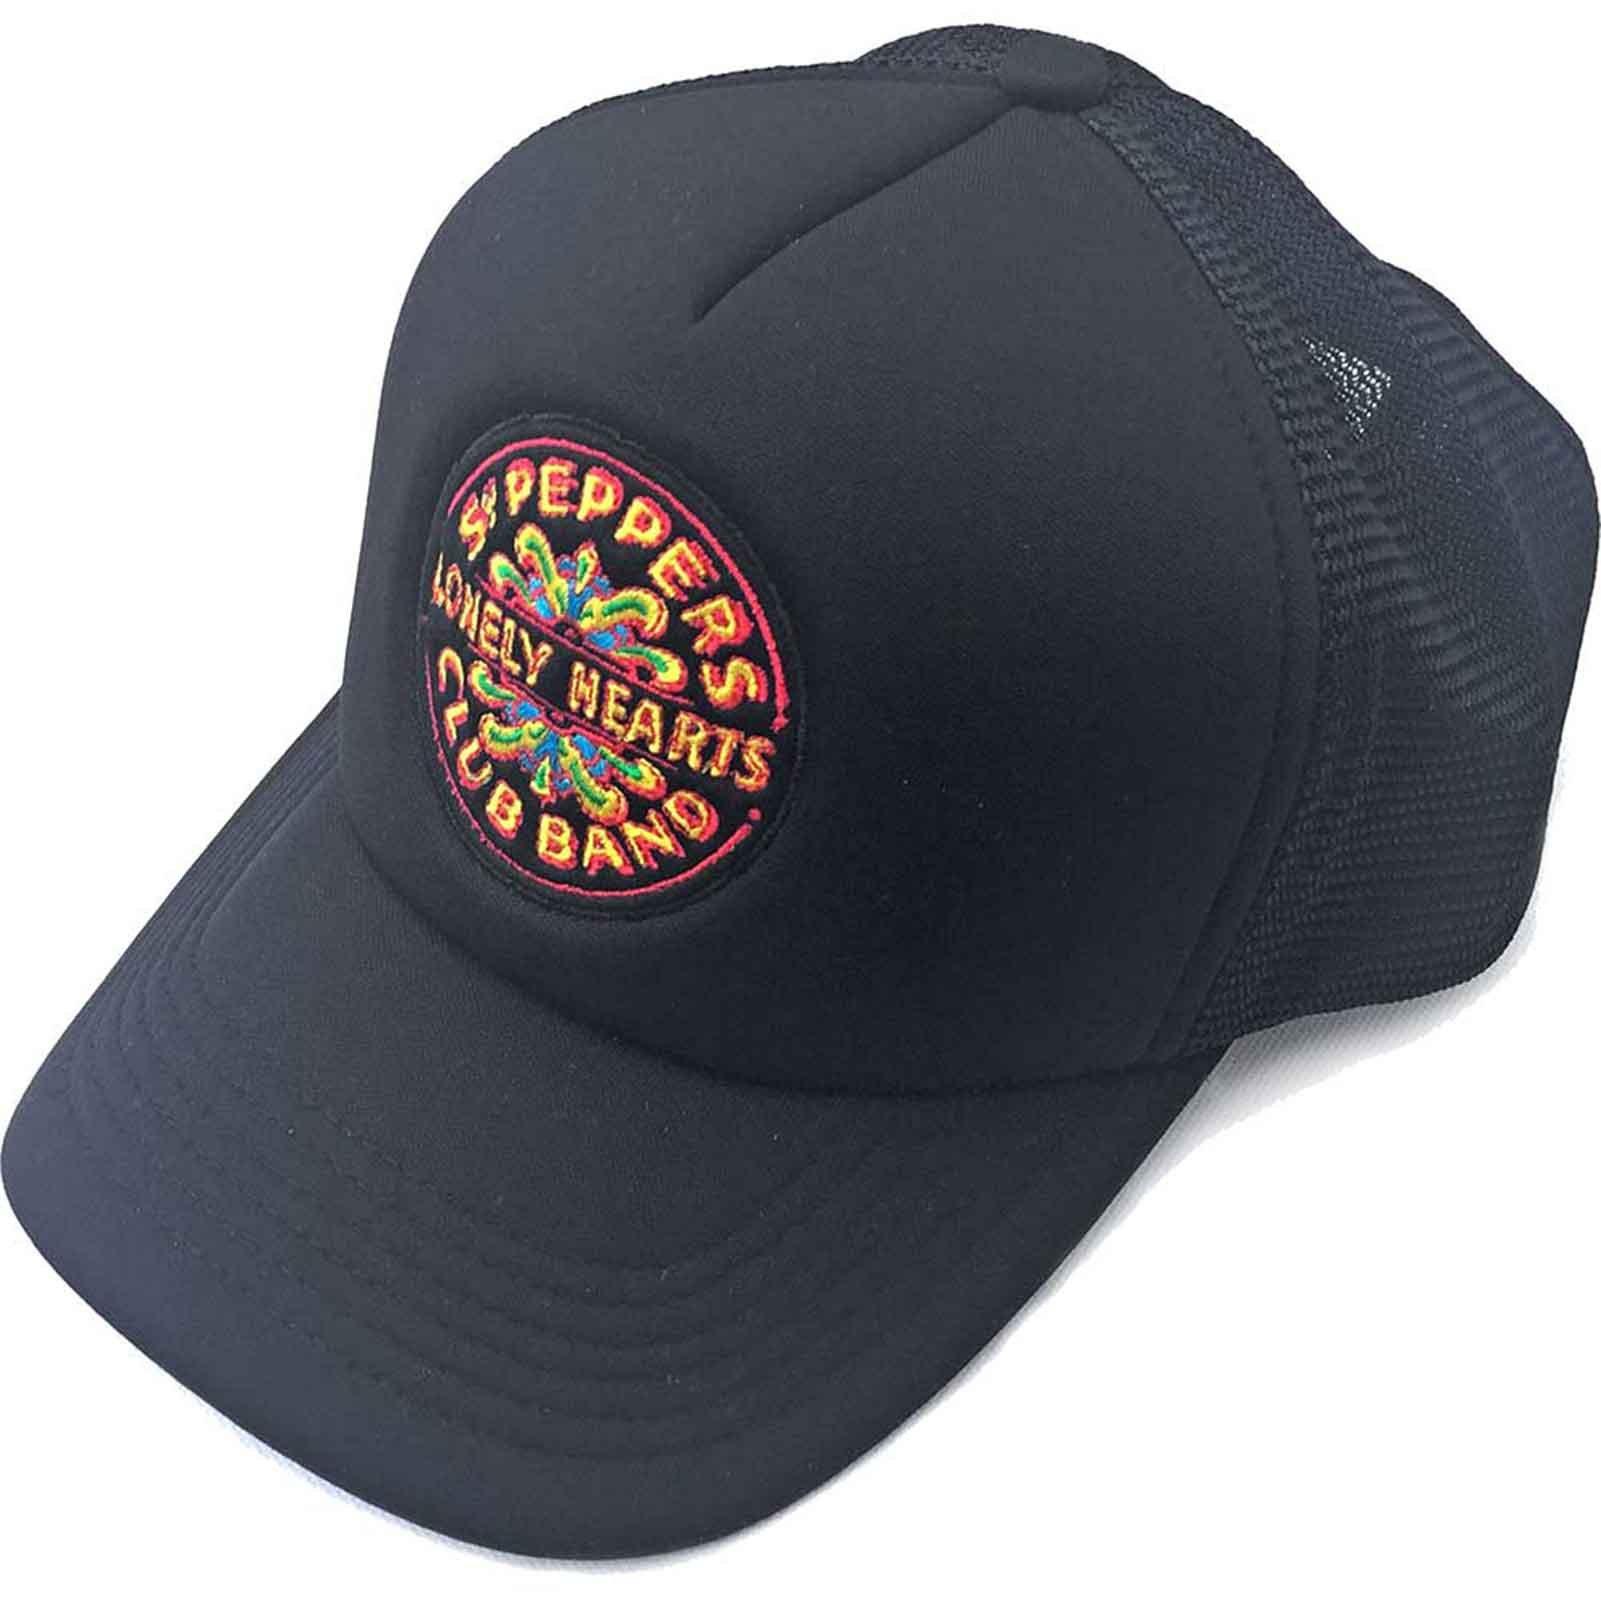 Бейсбольная кепка Trucker с логотипом Sgt Pepper Drum Beatles, черный бейсбольная кепка с ремешком на спине sgt pepper drum beatles синий